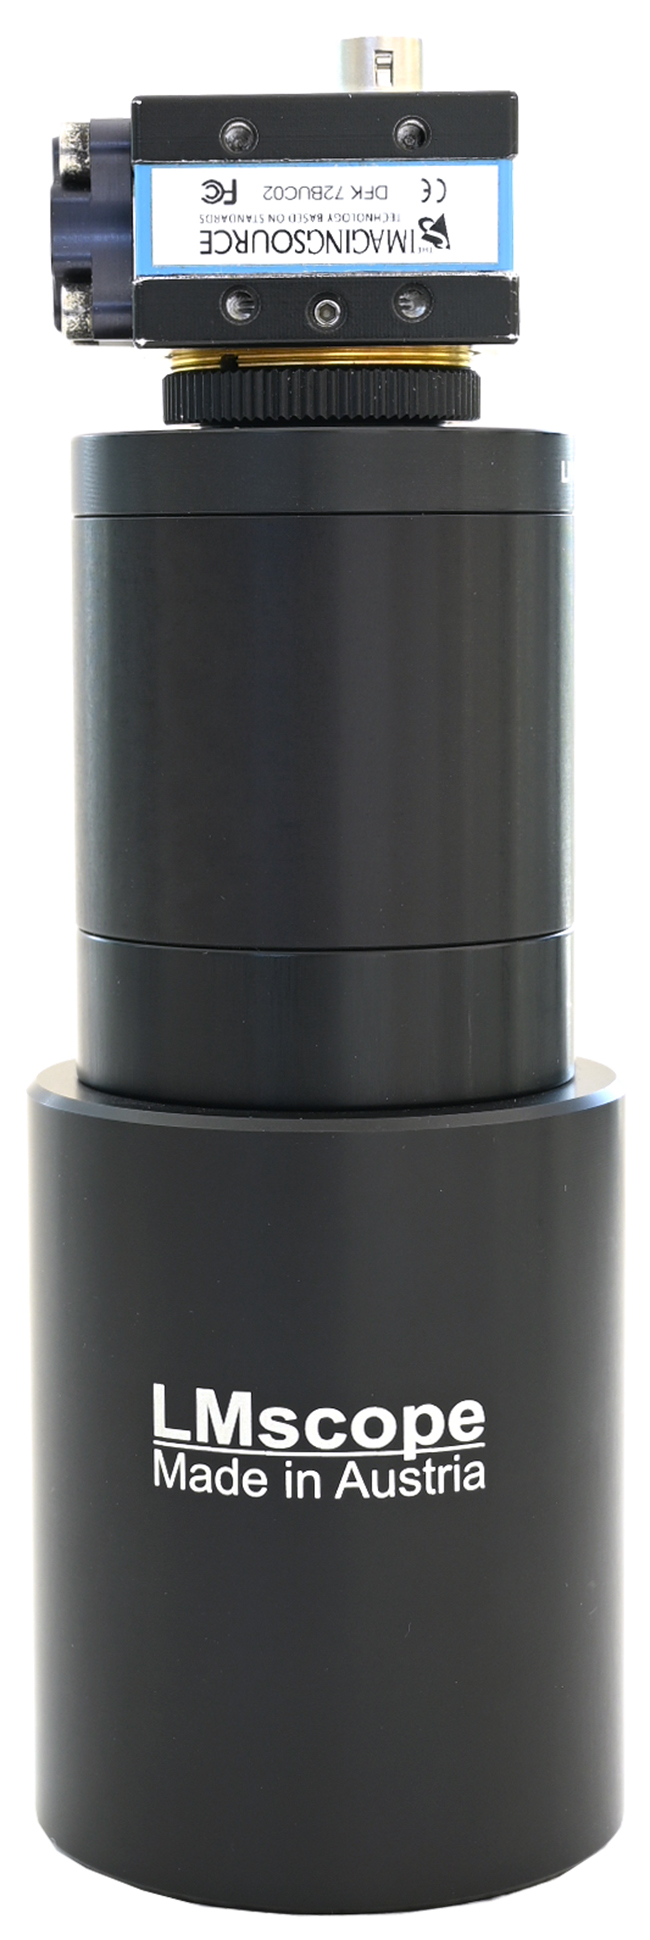 LM photo microscope with tube optics C-mount cameras, connect microscope lenses to C-mount cameras